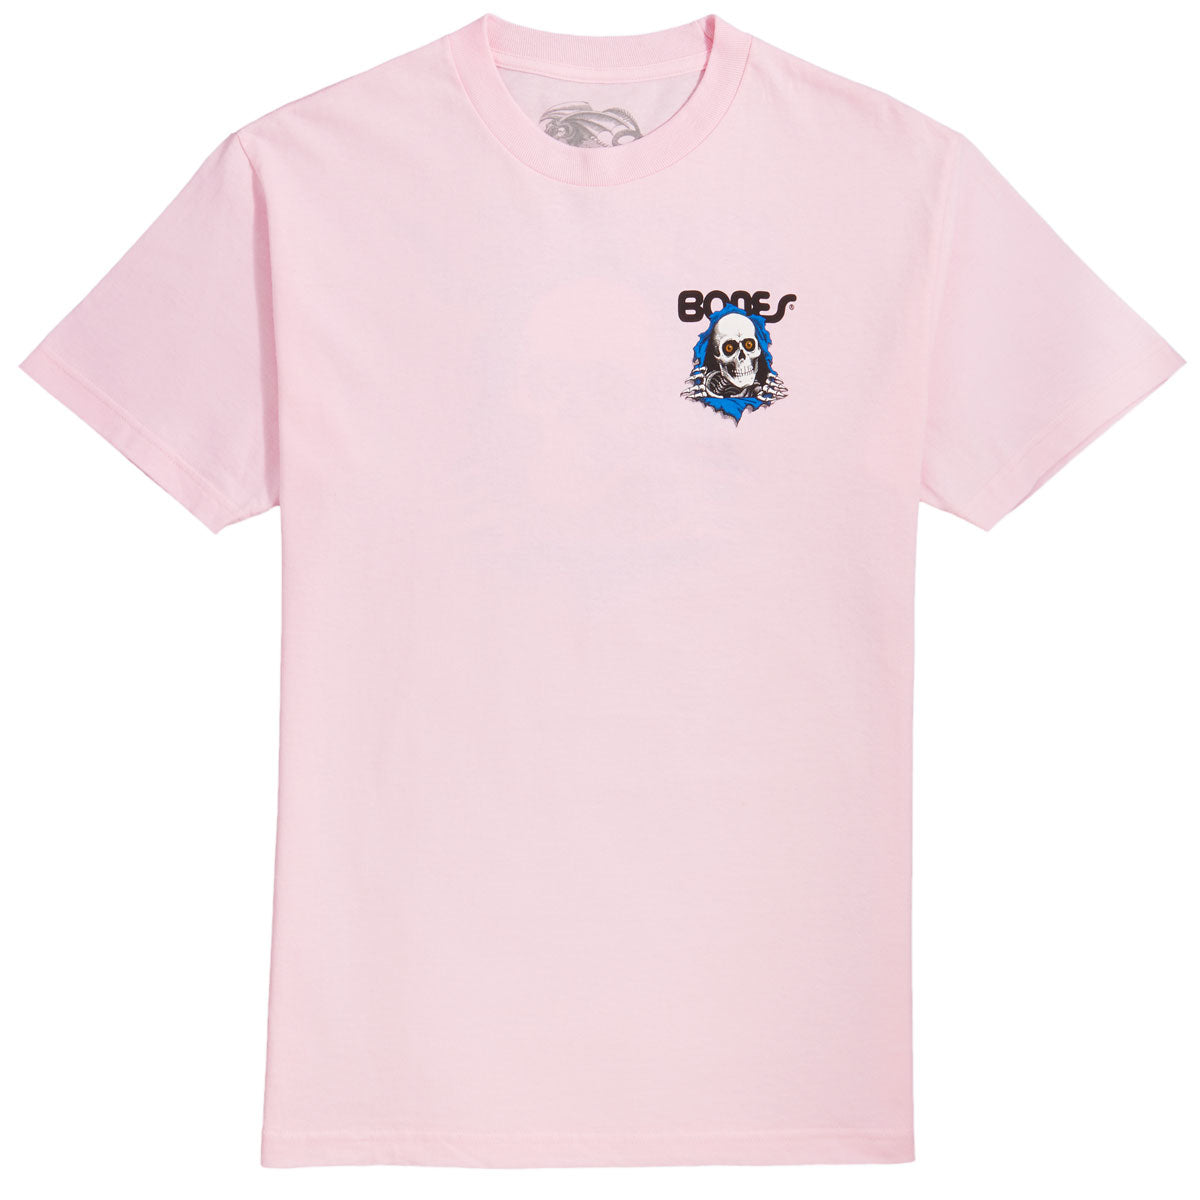 Powell-Peralta Ripper T-Shirt - Light Pink image 2